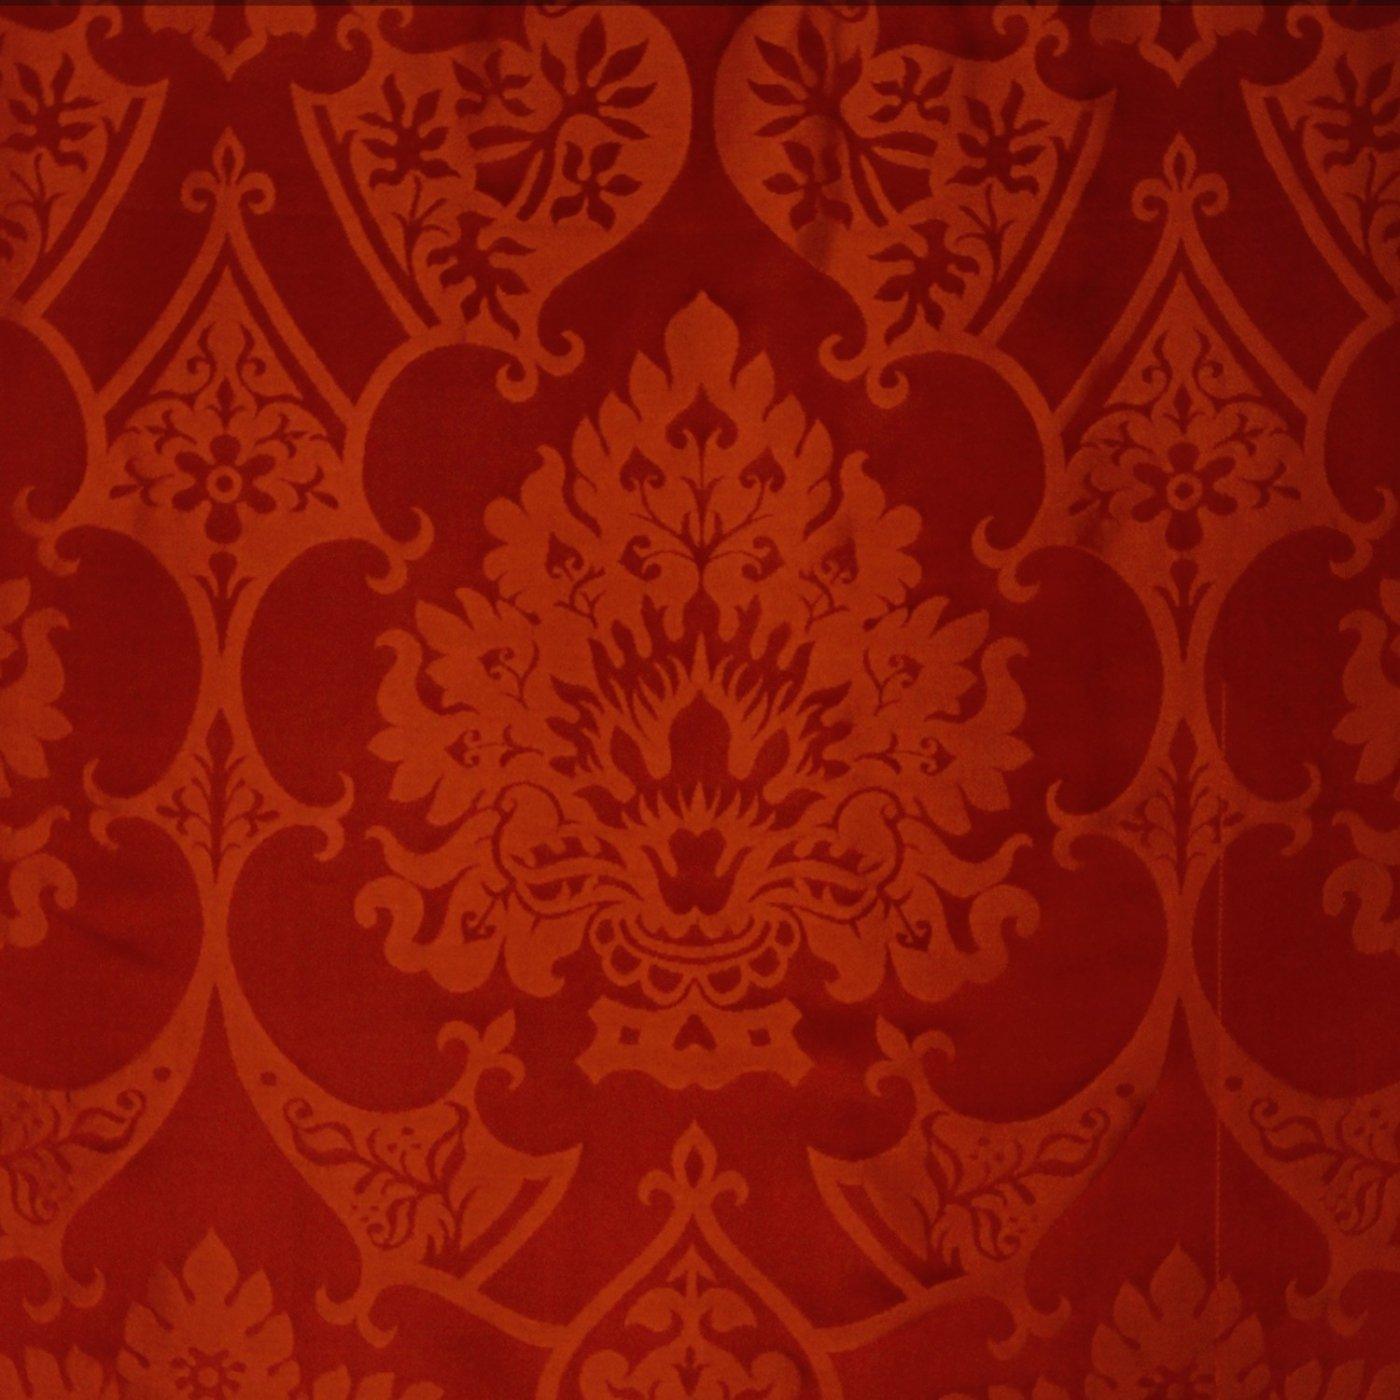 Gothic Dalmatic in Sarum Red Gothic with Dupion Silk/Pugin Orphreys - Watts & Co. (international)